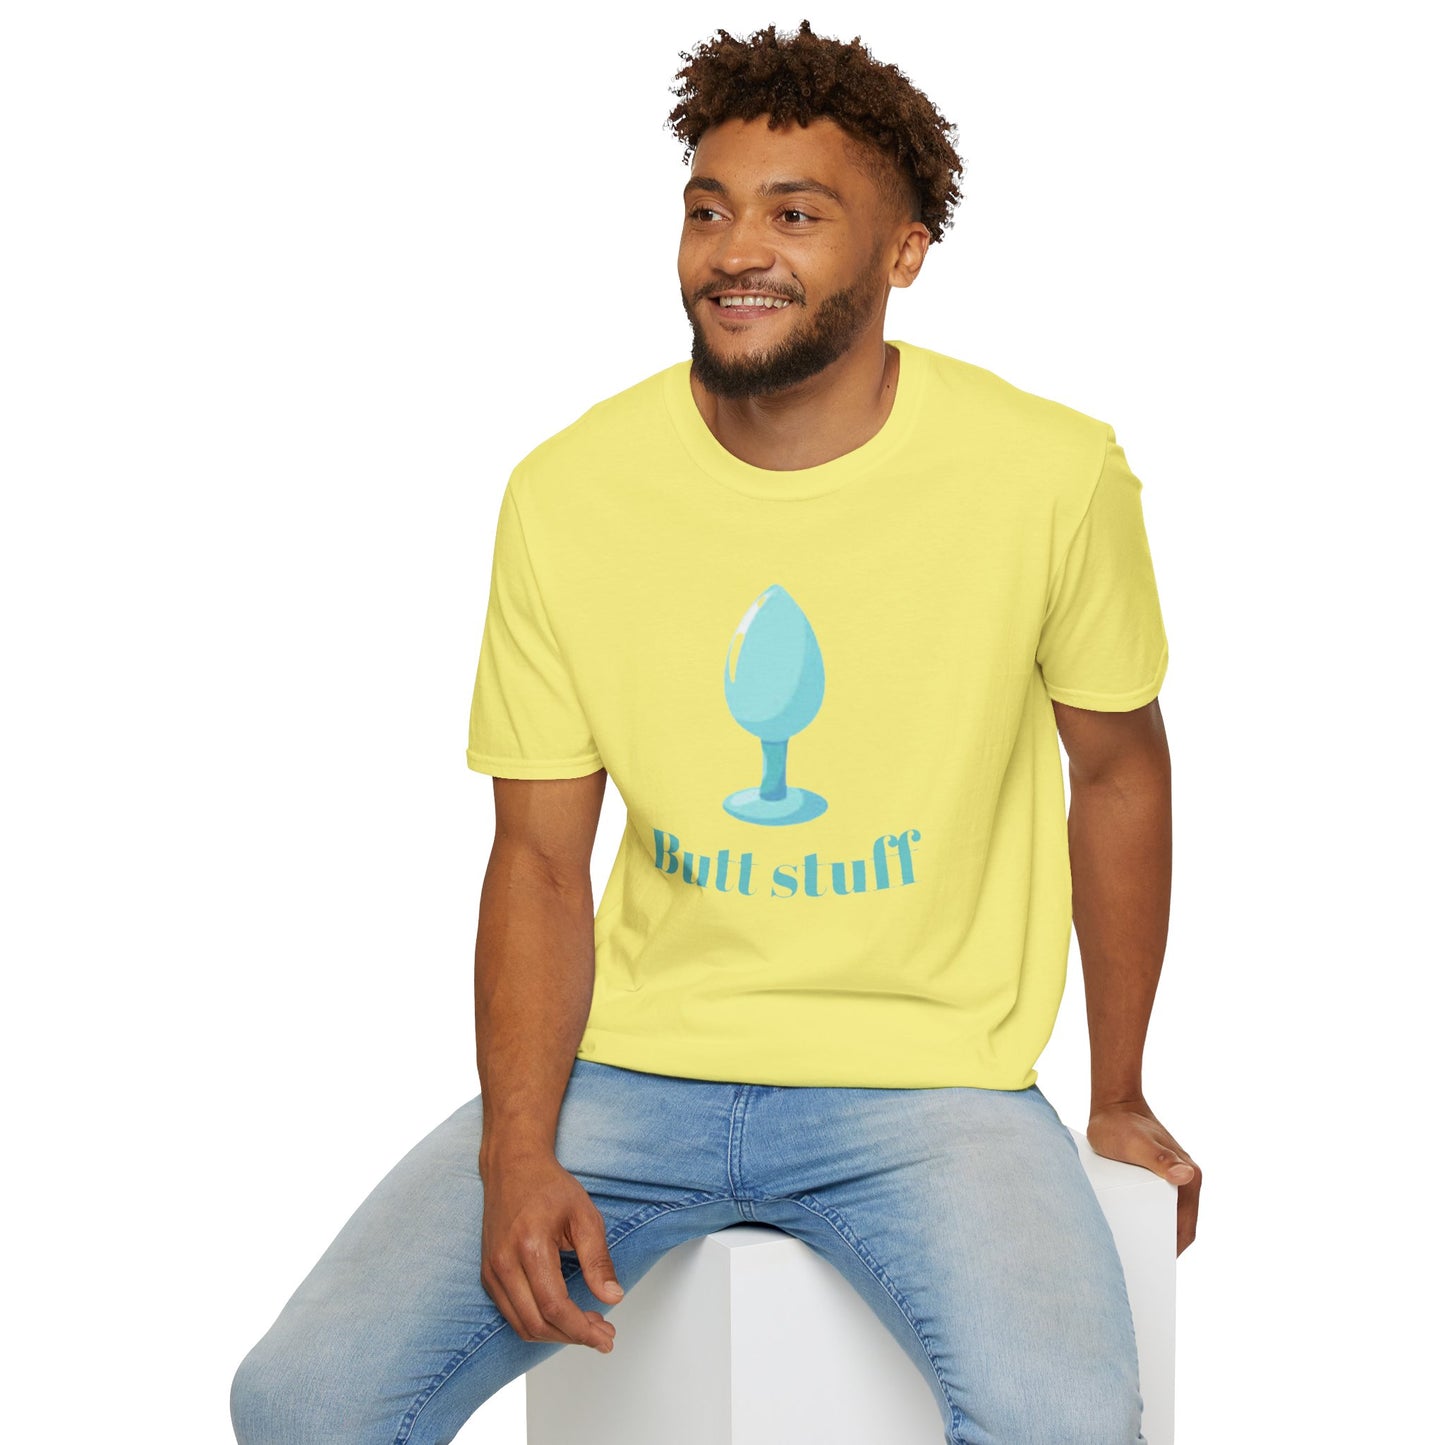 Butt Stuff Unisex Softstyle T-Shirt